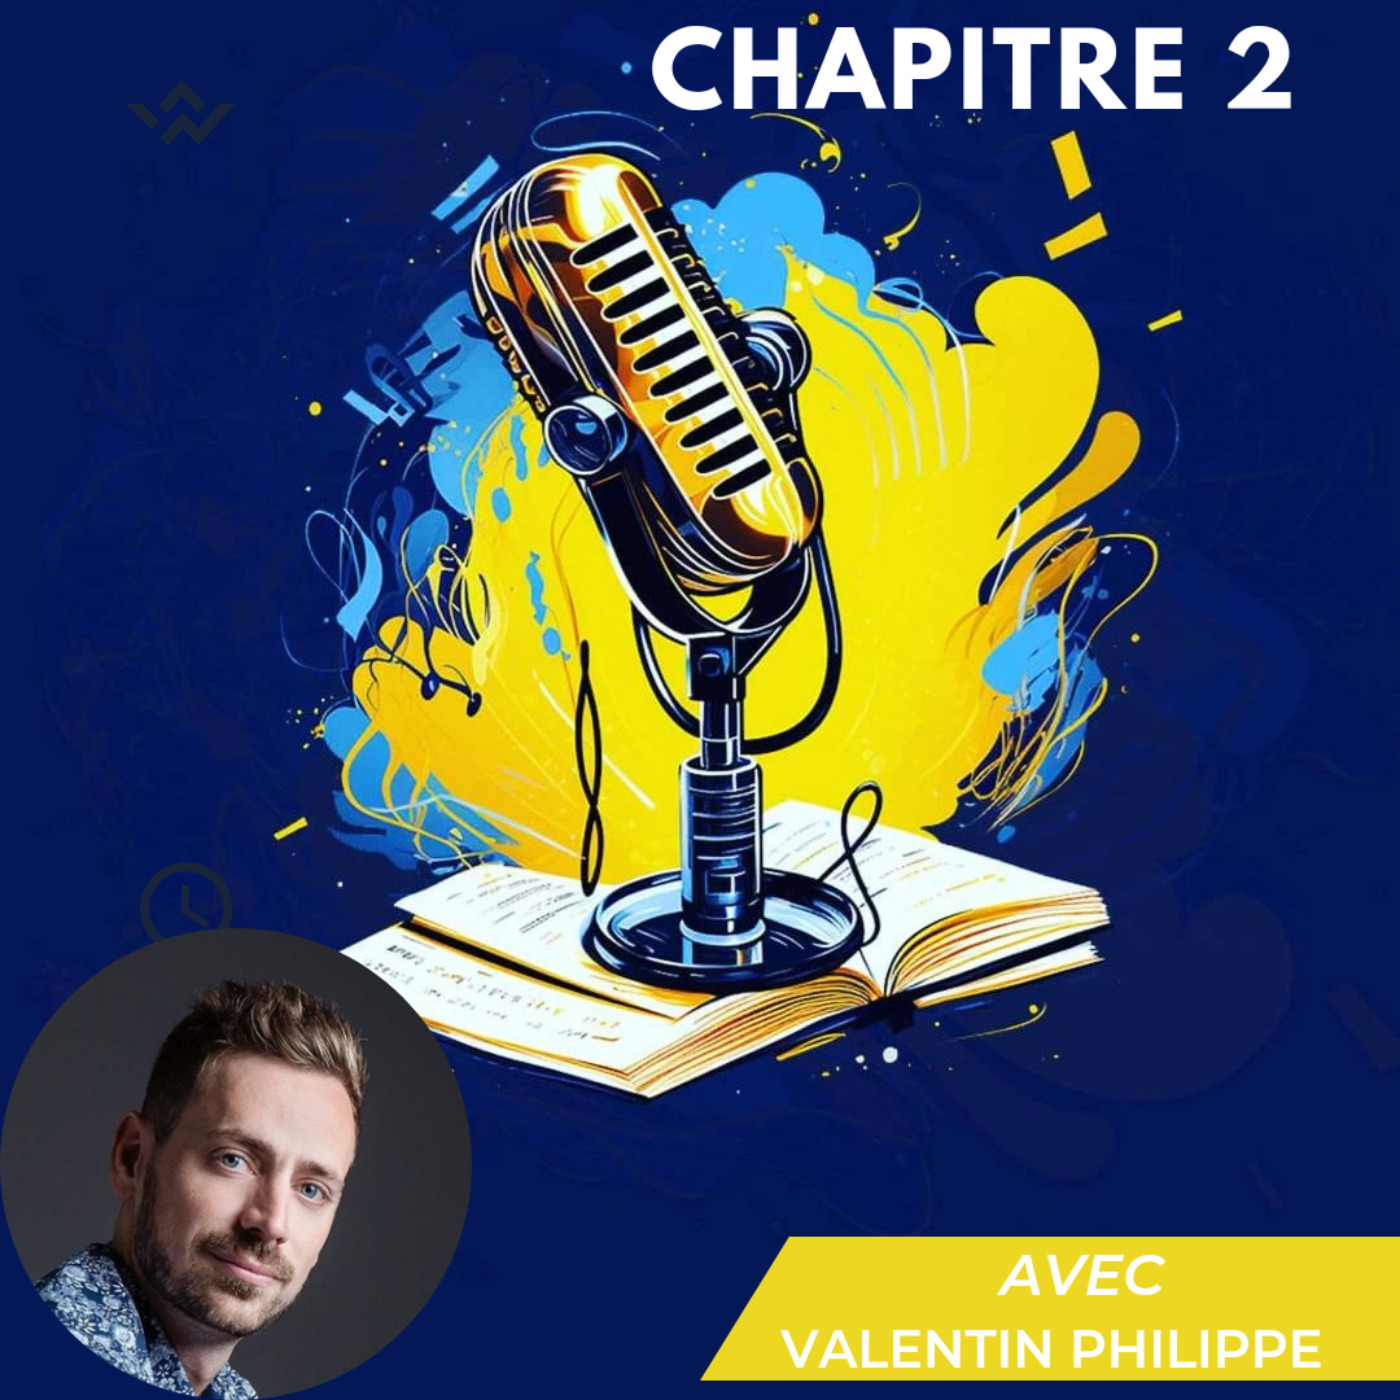 Episode 13: Valentin Philippe